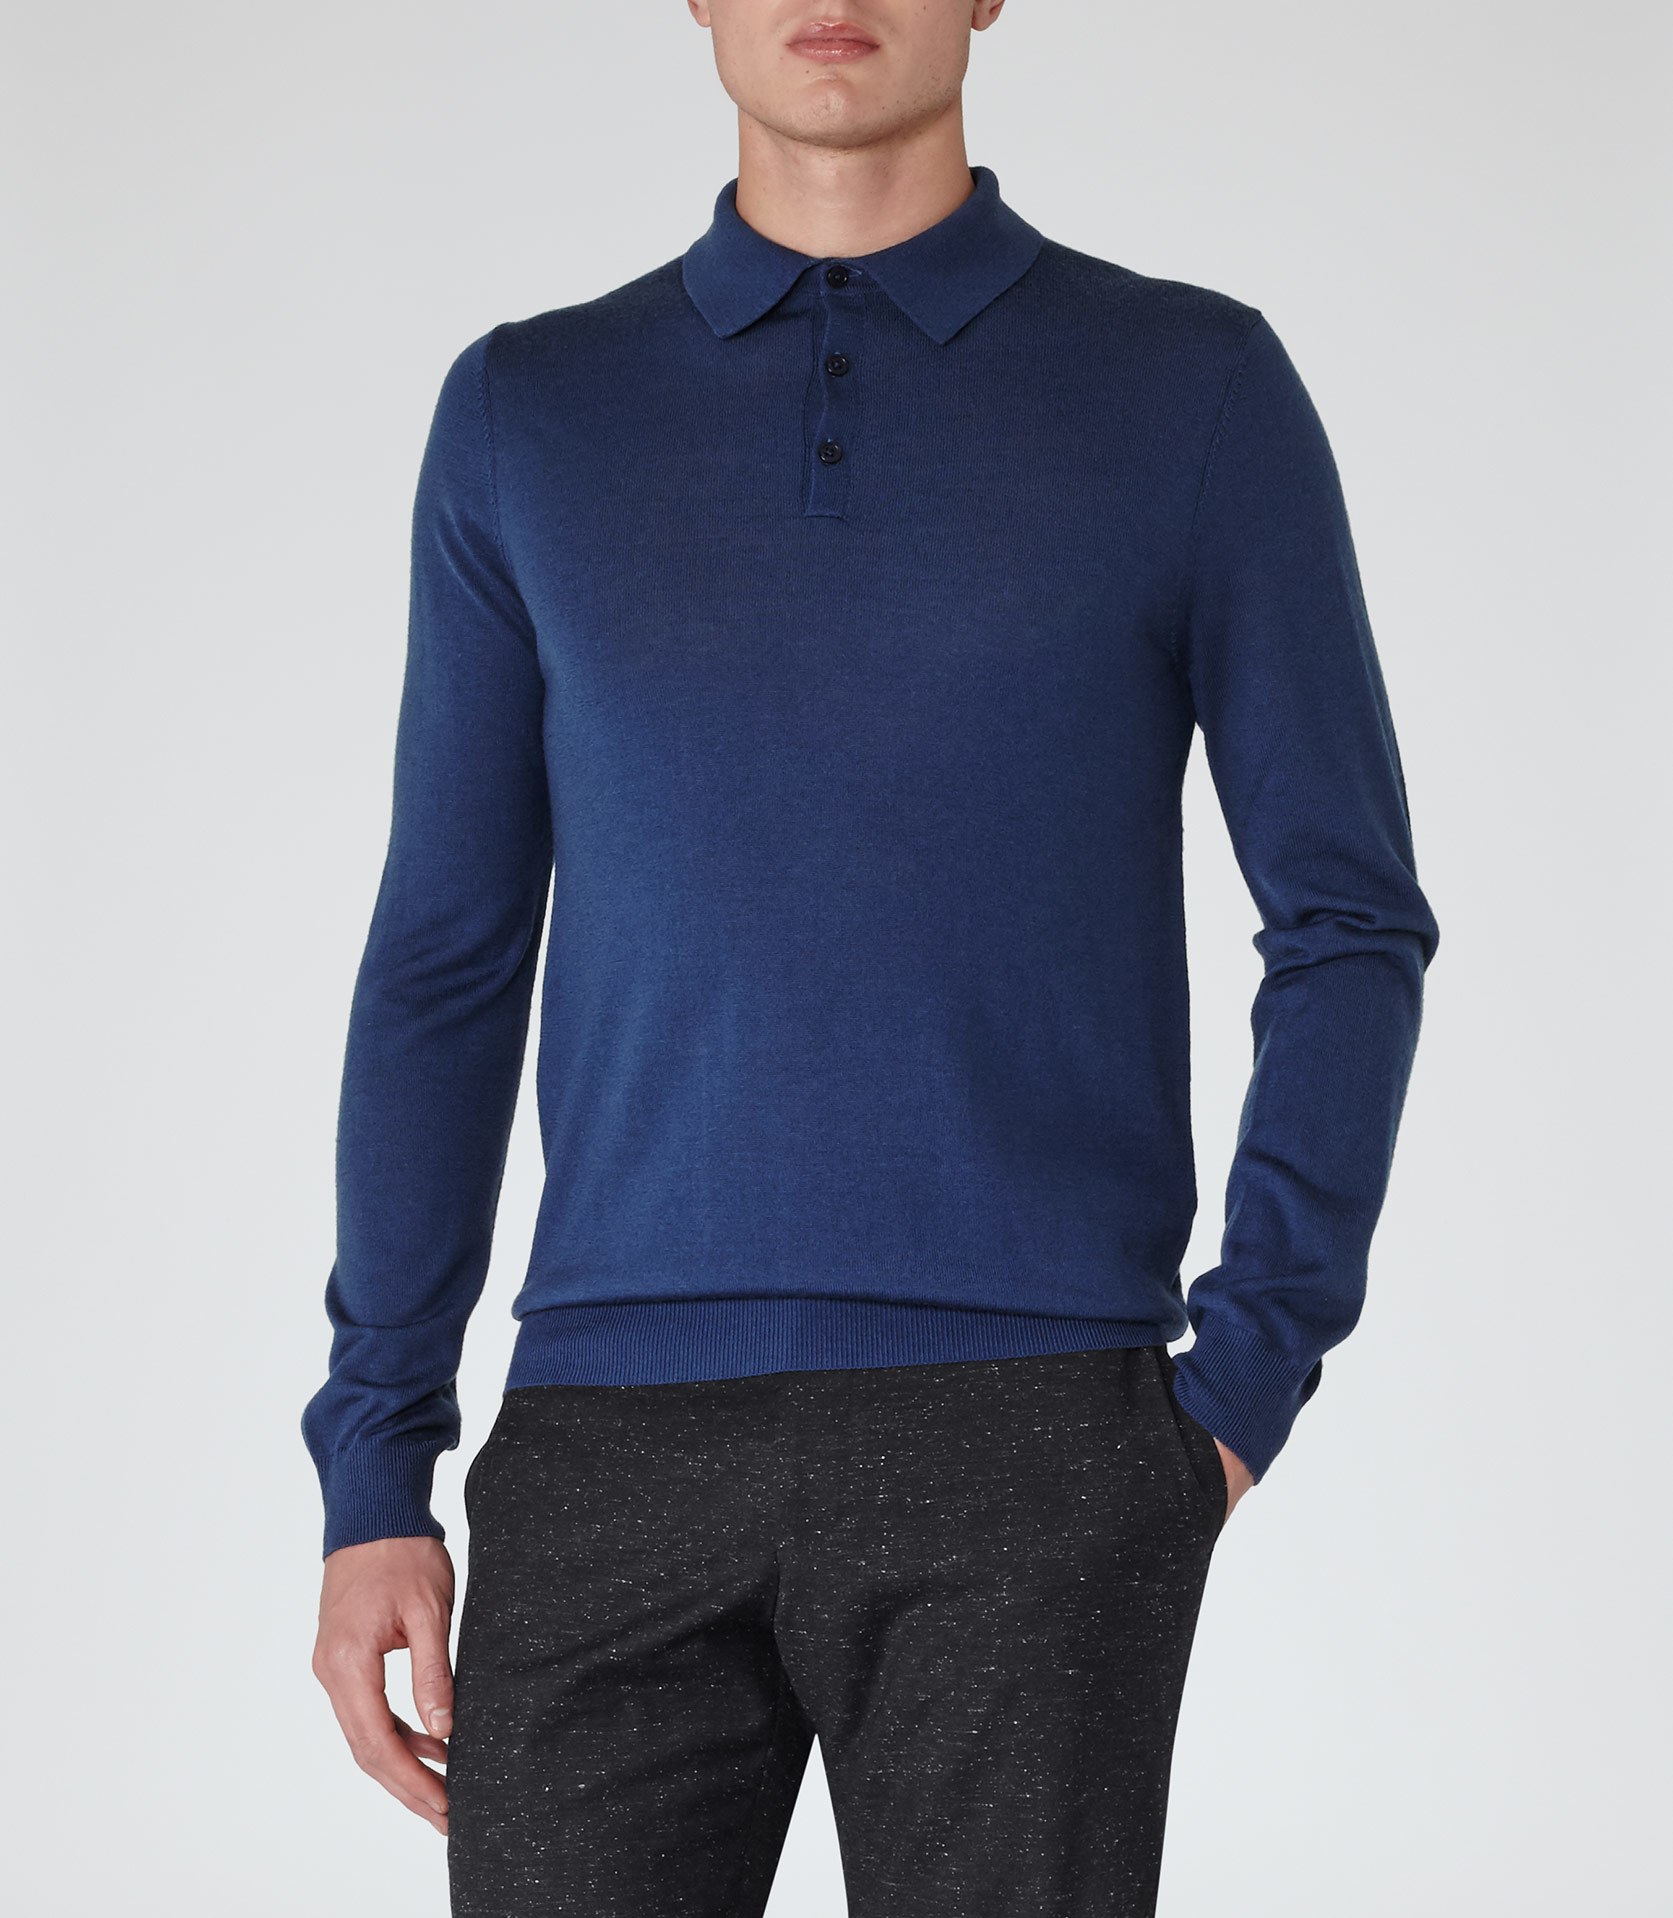 Lyst - Reiss Mansion Merino Wool Polo Shirt in Blue for Men